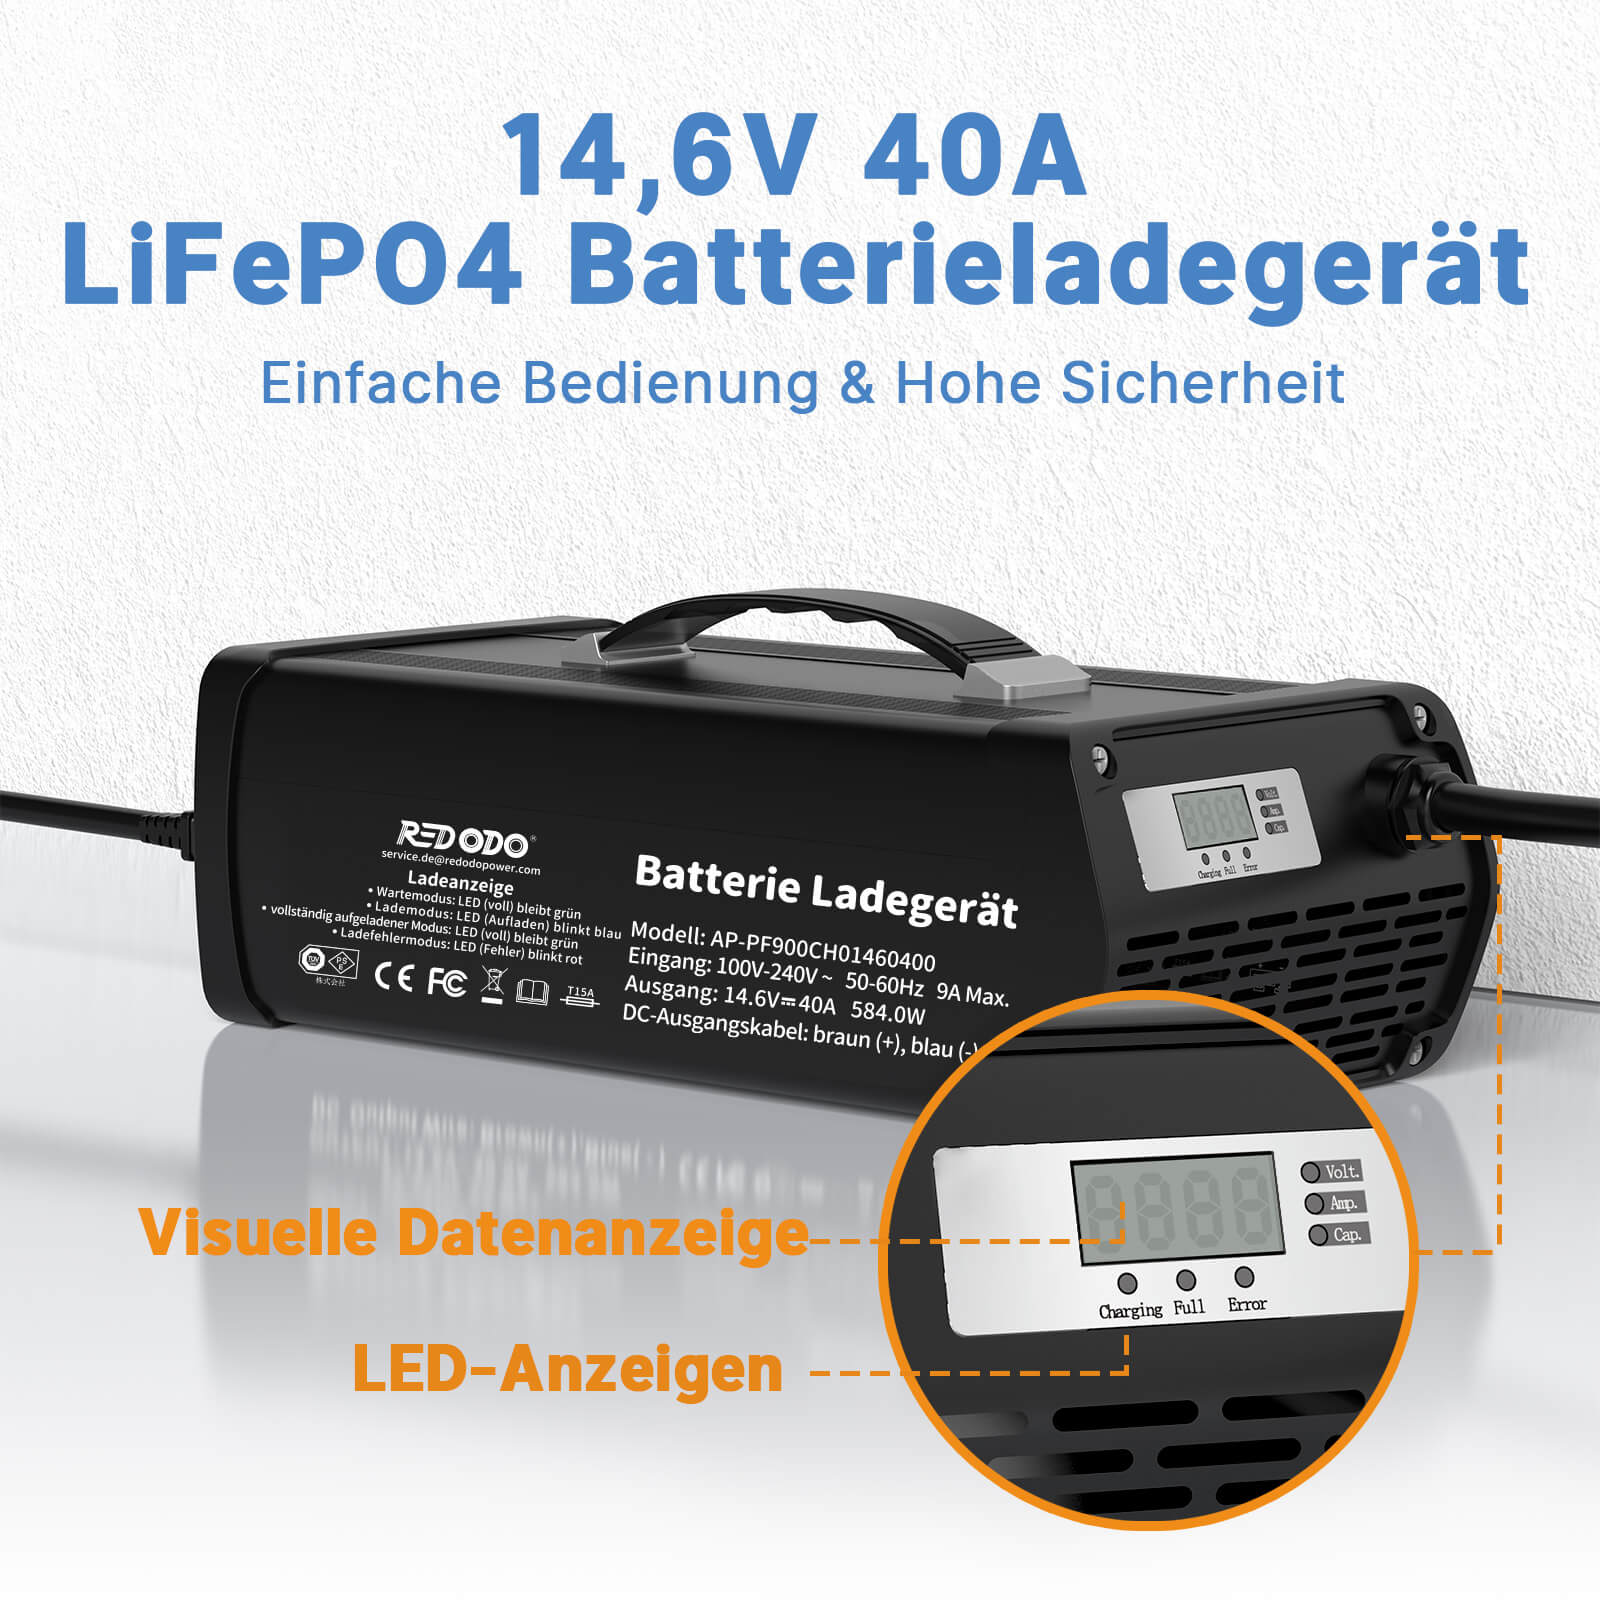 Redodo 14,6V 40A LiFePO4 Lithium Batterieladegerät